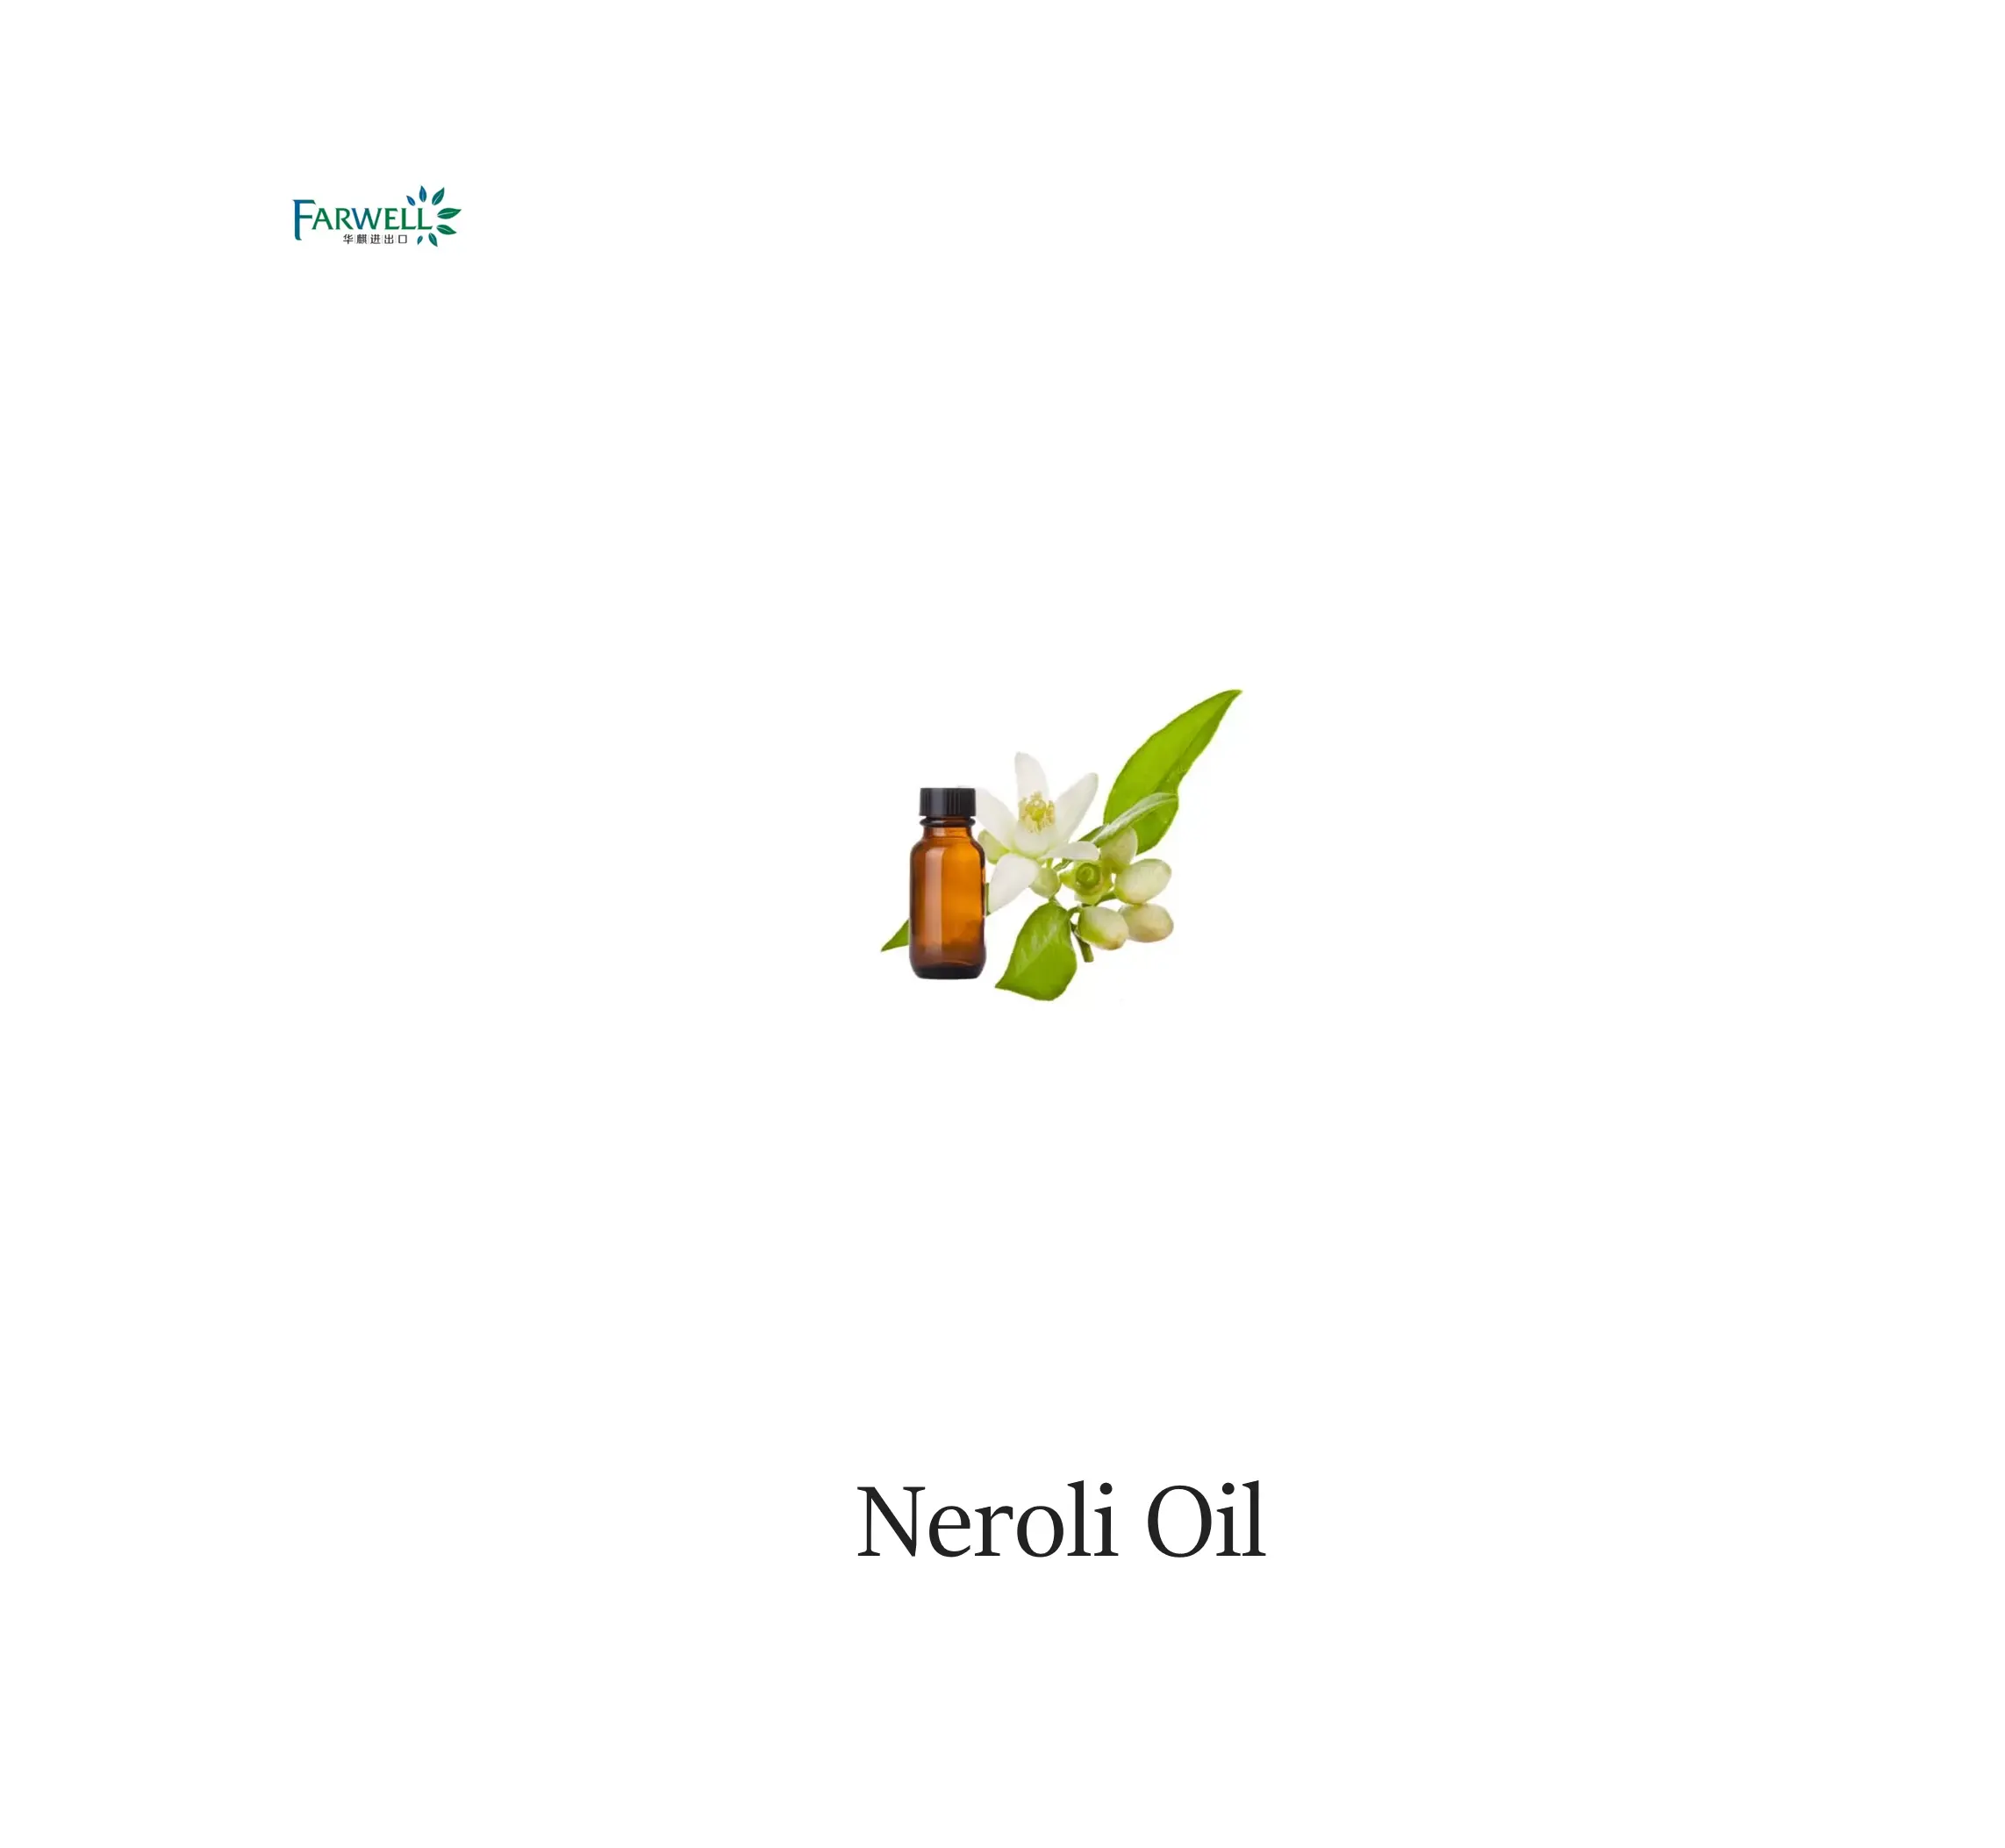 Farwell Good Perfume Oil Orange Flower Oil Neroli Oil